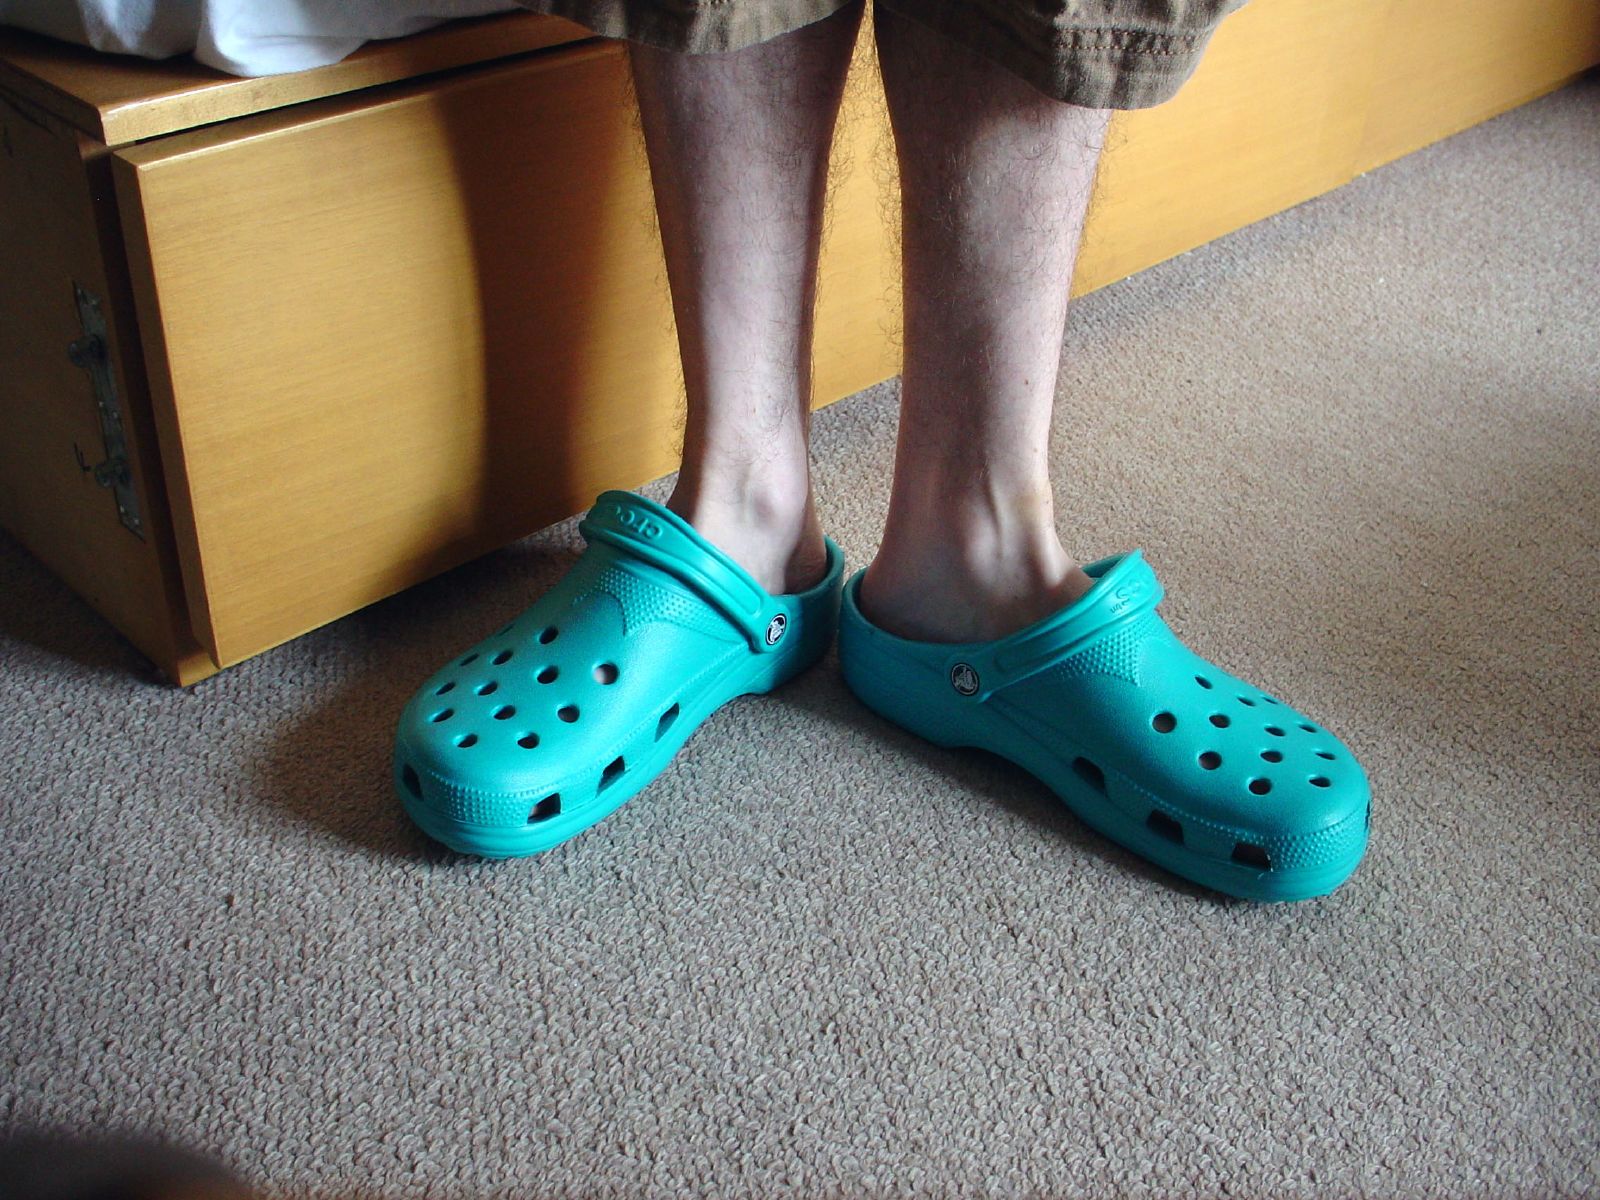 translucent crocs on feet